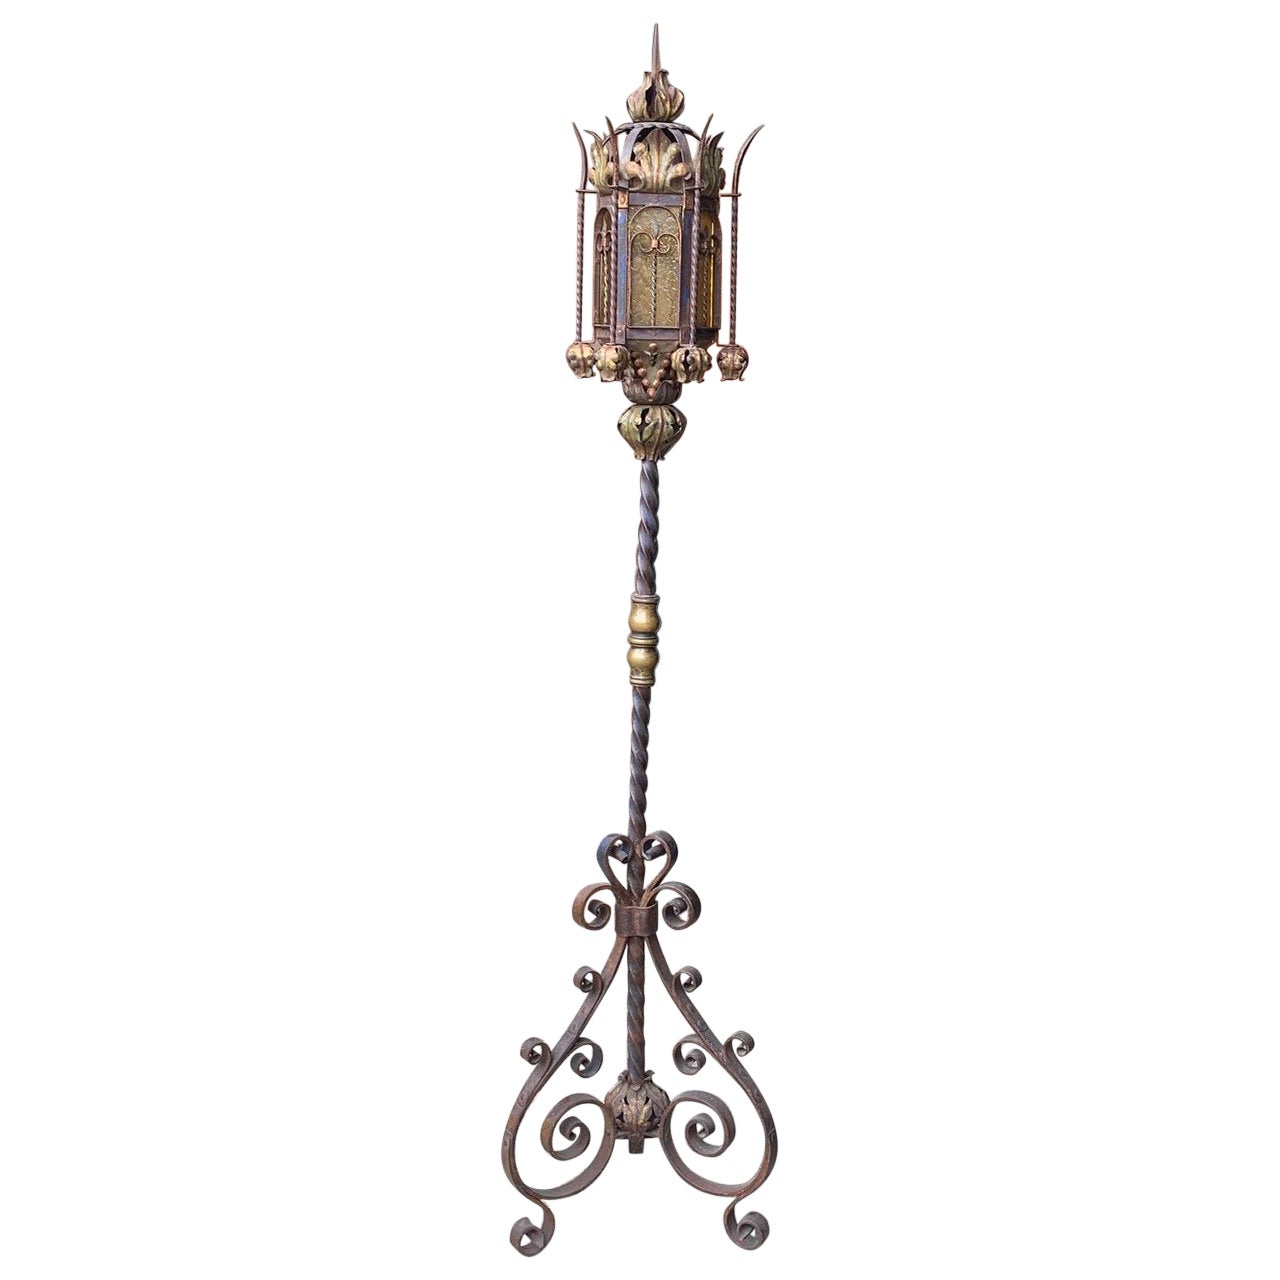 Gothic Revival Standard Lantern